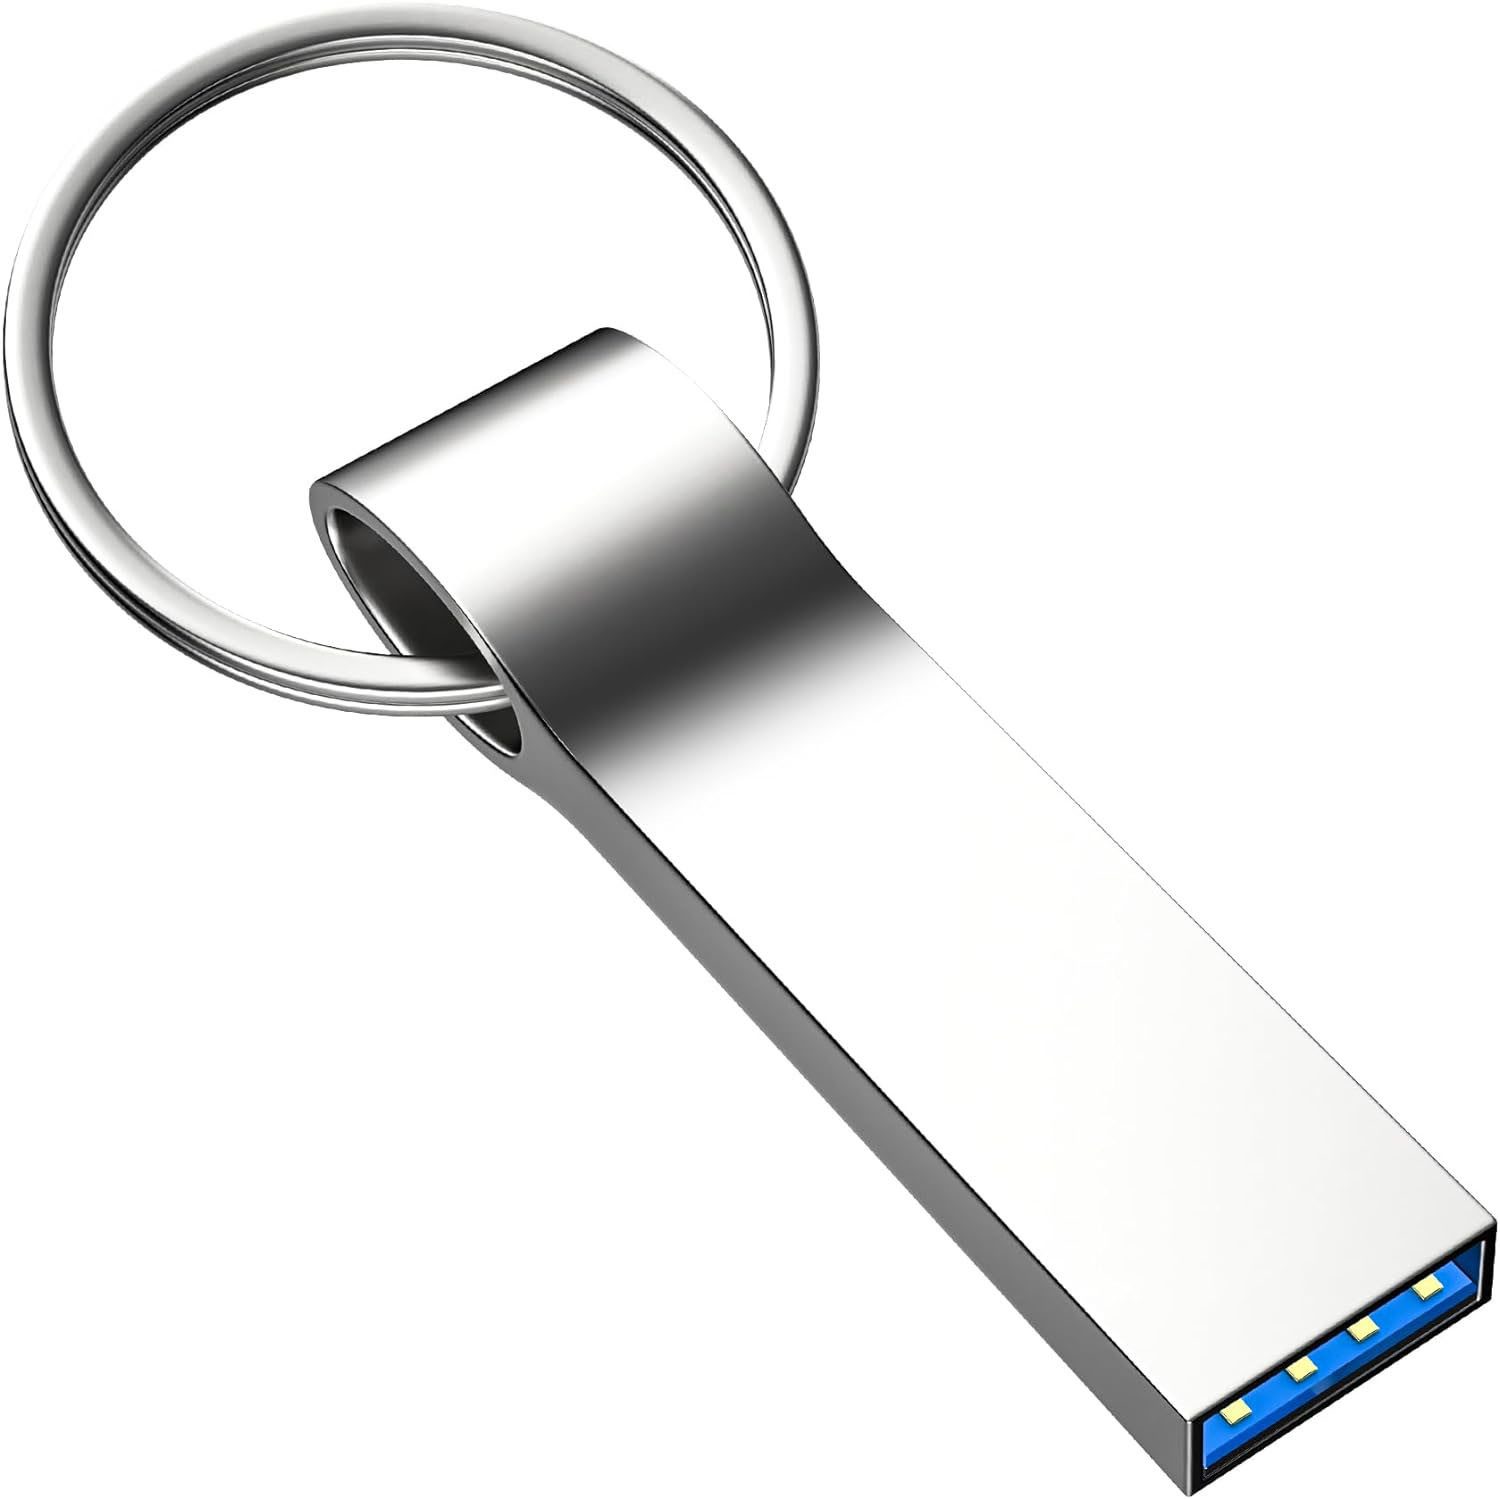 Haiaveng Usb Stick 3.0 64GB Große Metall Tragbar USB Flash Drive USB-Stick (USB 3.0, mit Schlüsselanhänger Memory Stick für Computer/PC/Laptop/Tablet)